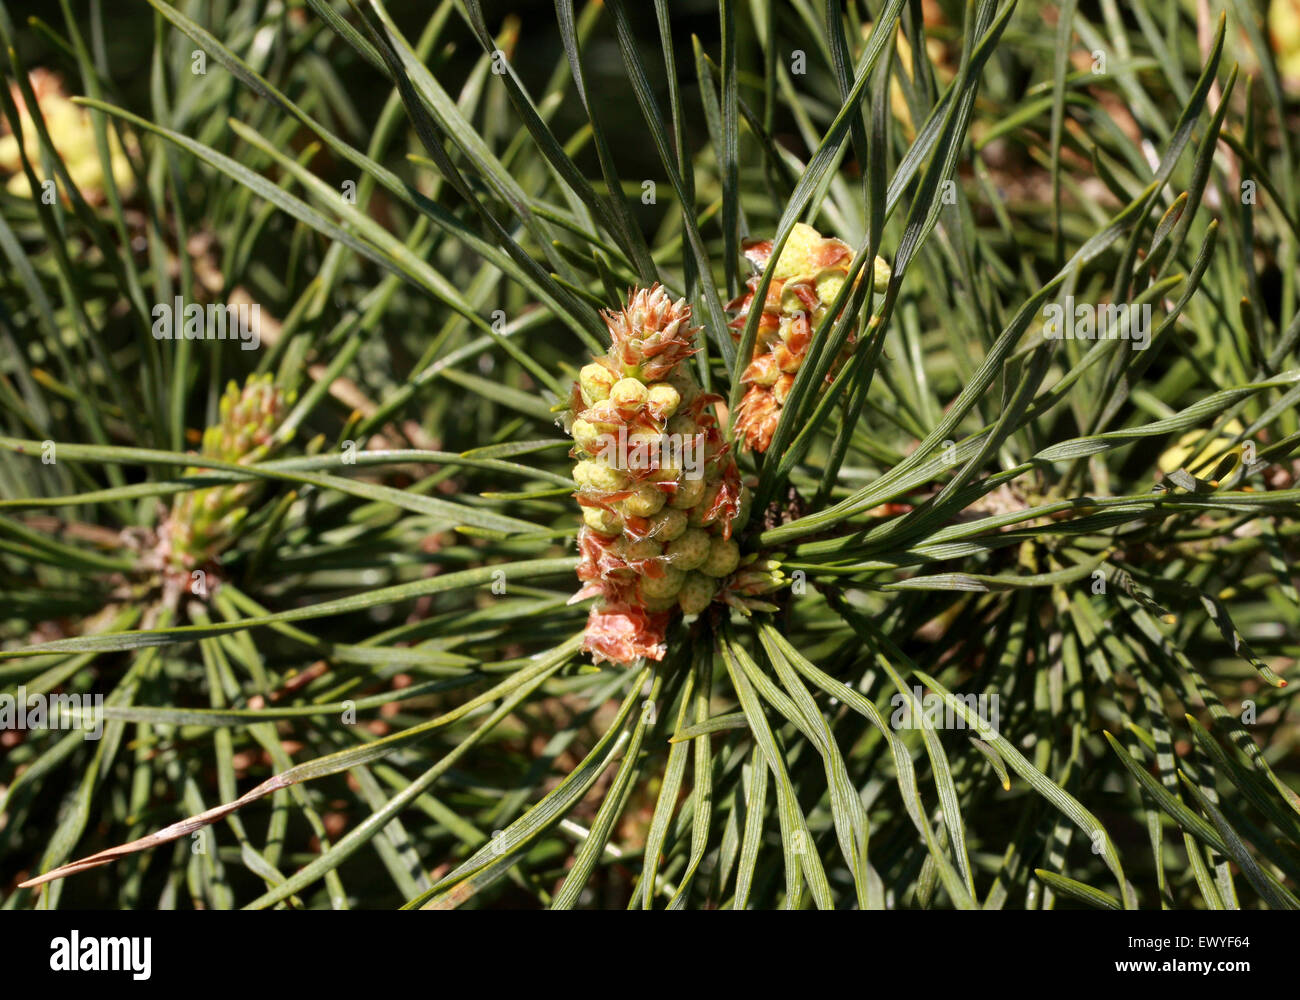 Scot mongol de pino, Pinus sylvestris var. mongolica, Pinaceae. Mongolia, Siberia, Manchuria, China. Foto de stock